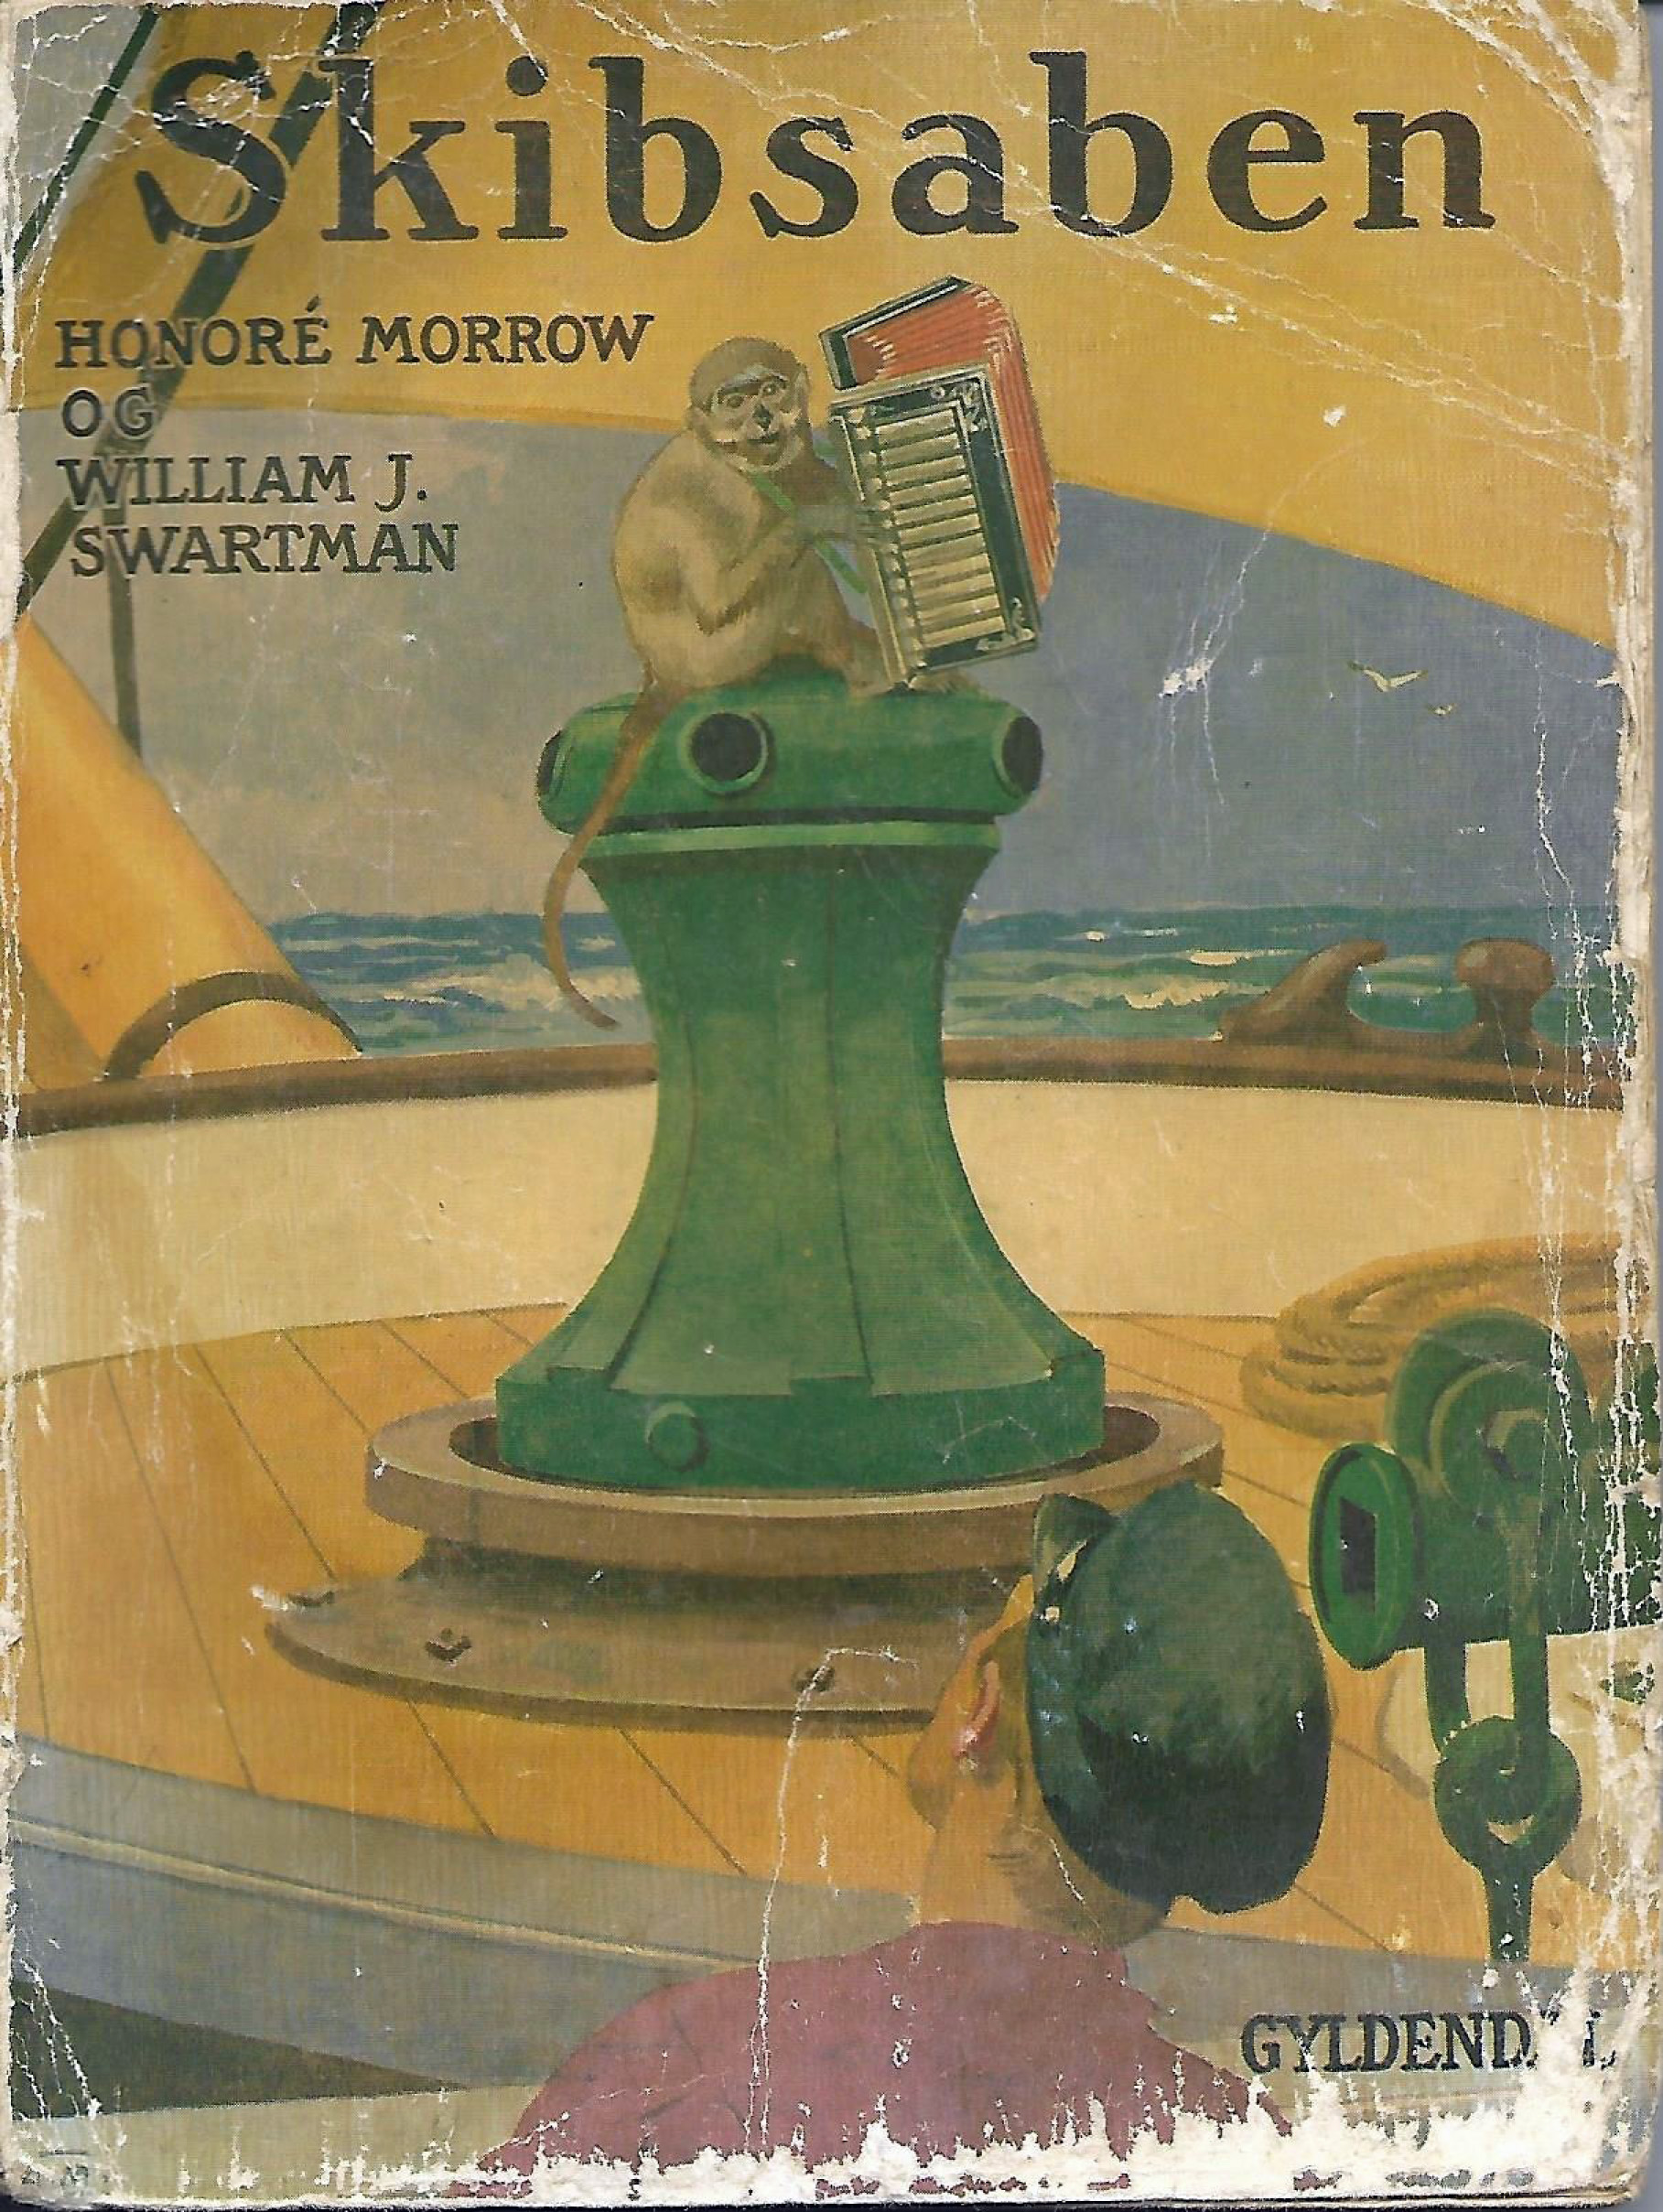 Skibsaben - Honore Morrow og William J Swartman - 1954-1